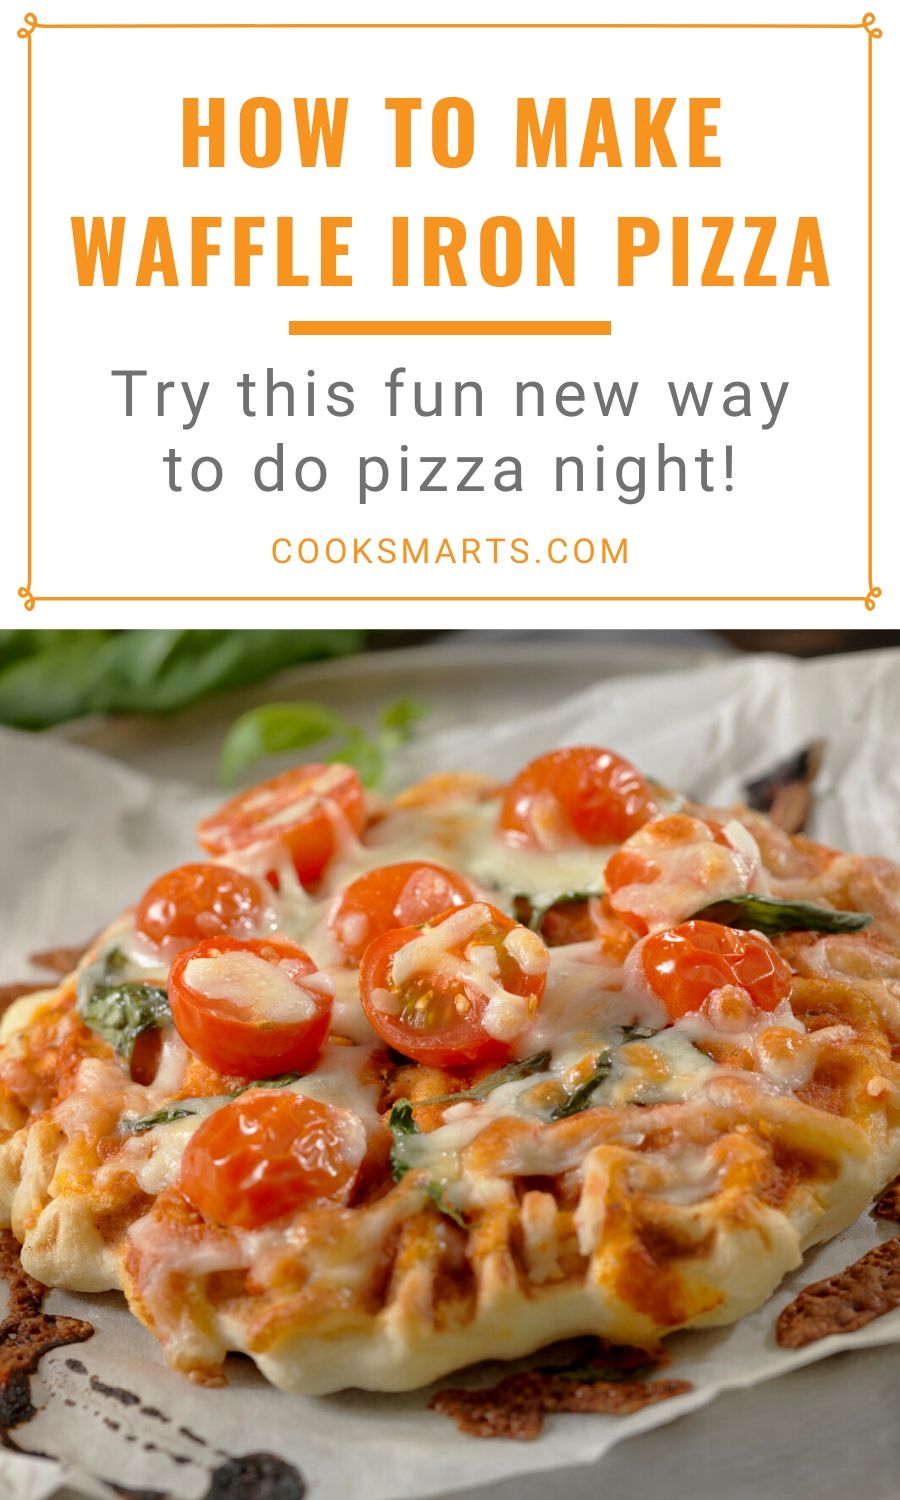 Waffle Iron Pizza Recipe | Cook Smarts